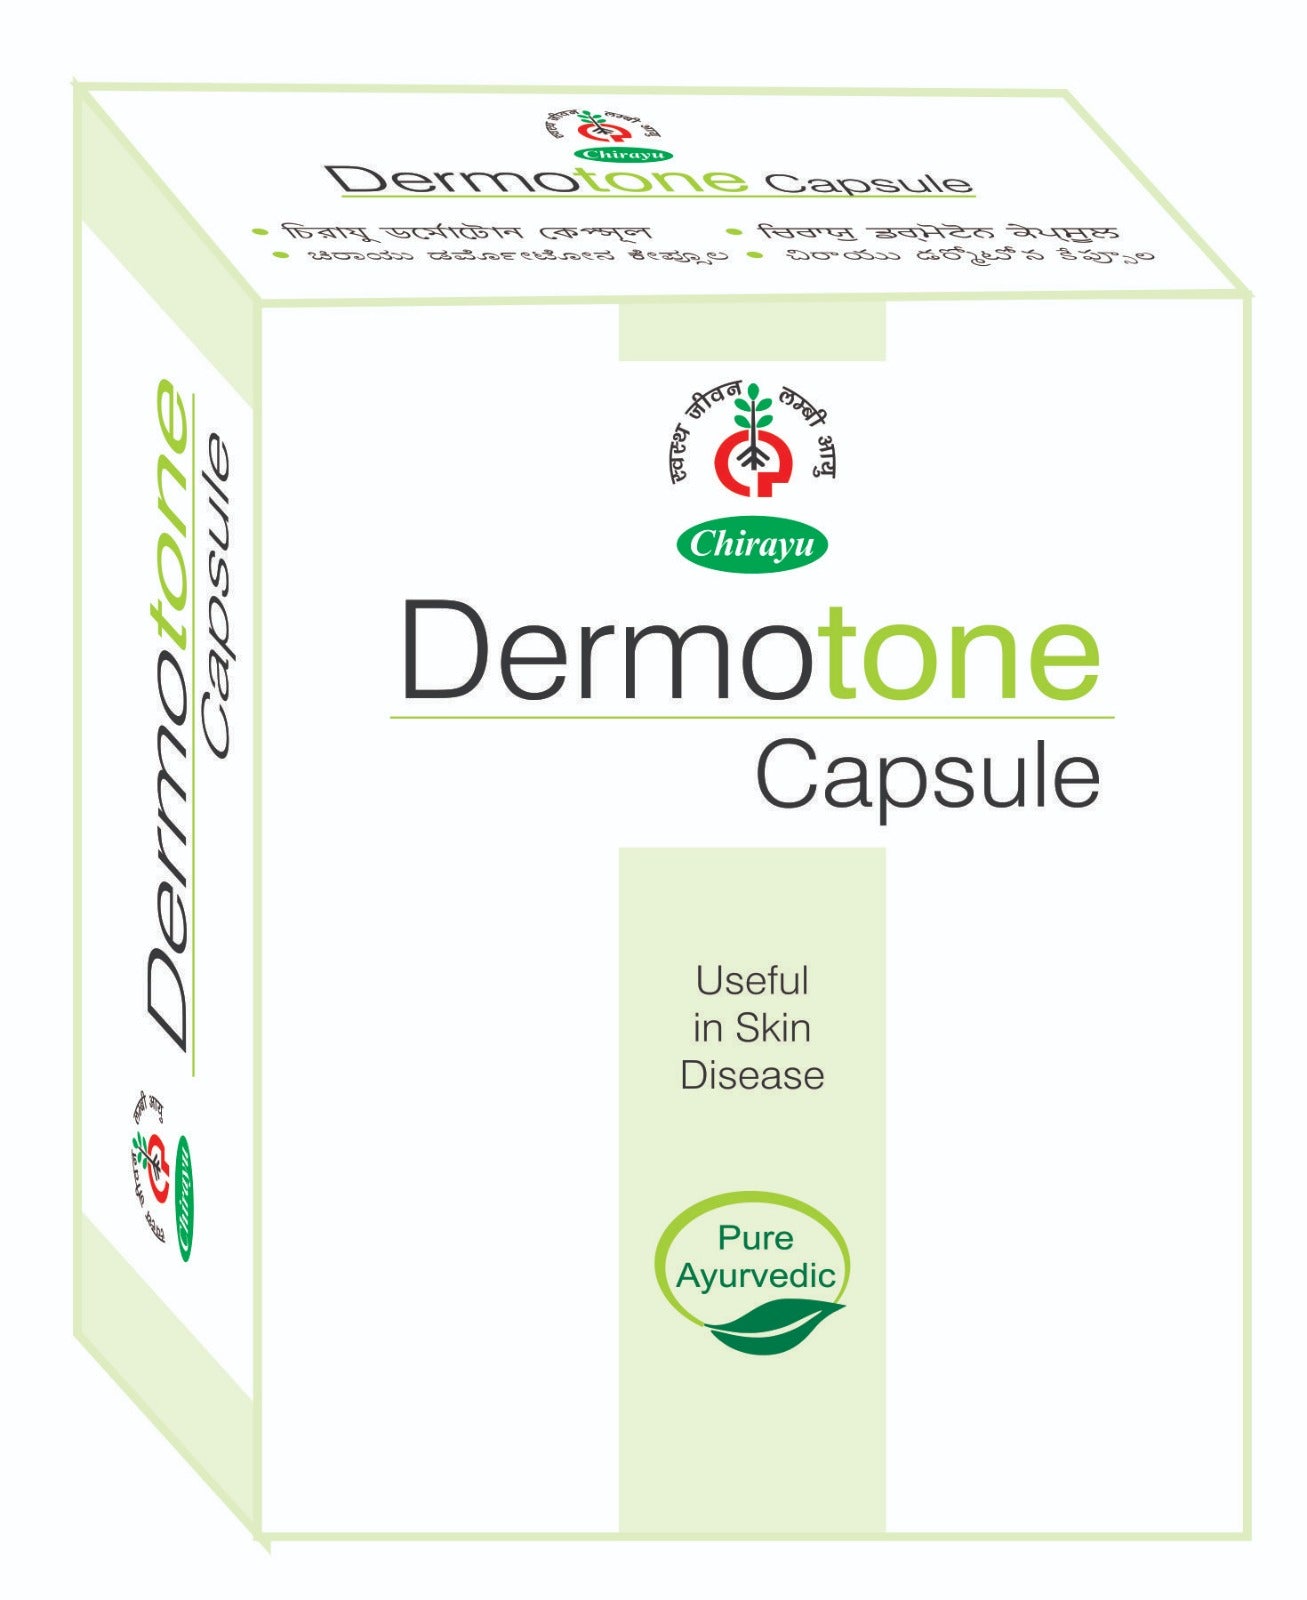 DERMOTONE CAPSULE: Ayurvedic/Natural Capsule Useful For Skin Diseases, Itching, Acne Pimples, Urticaria